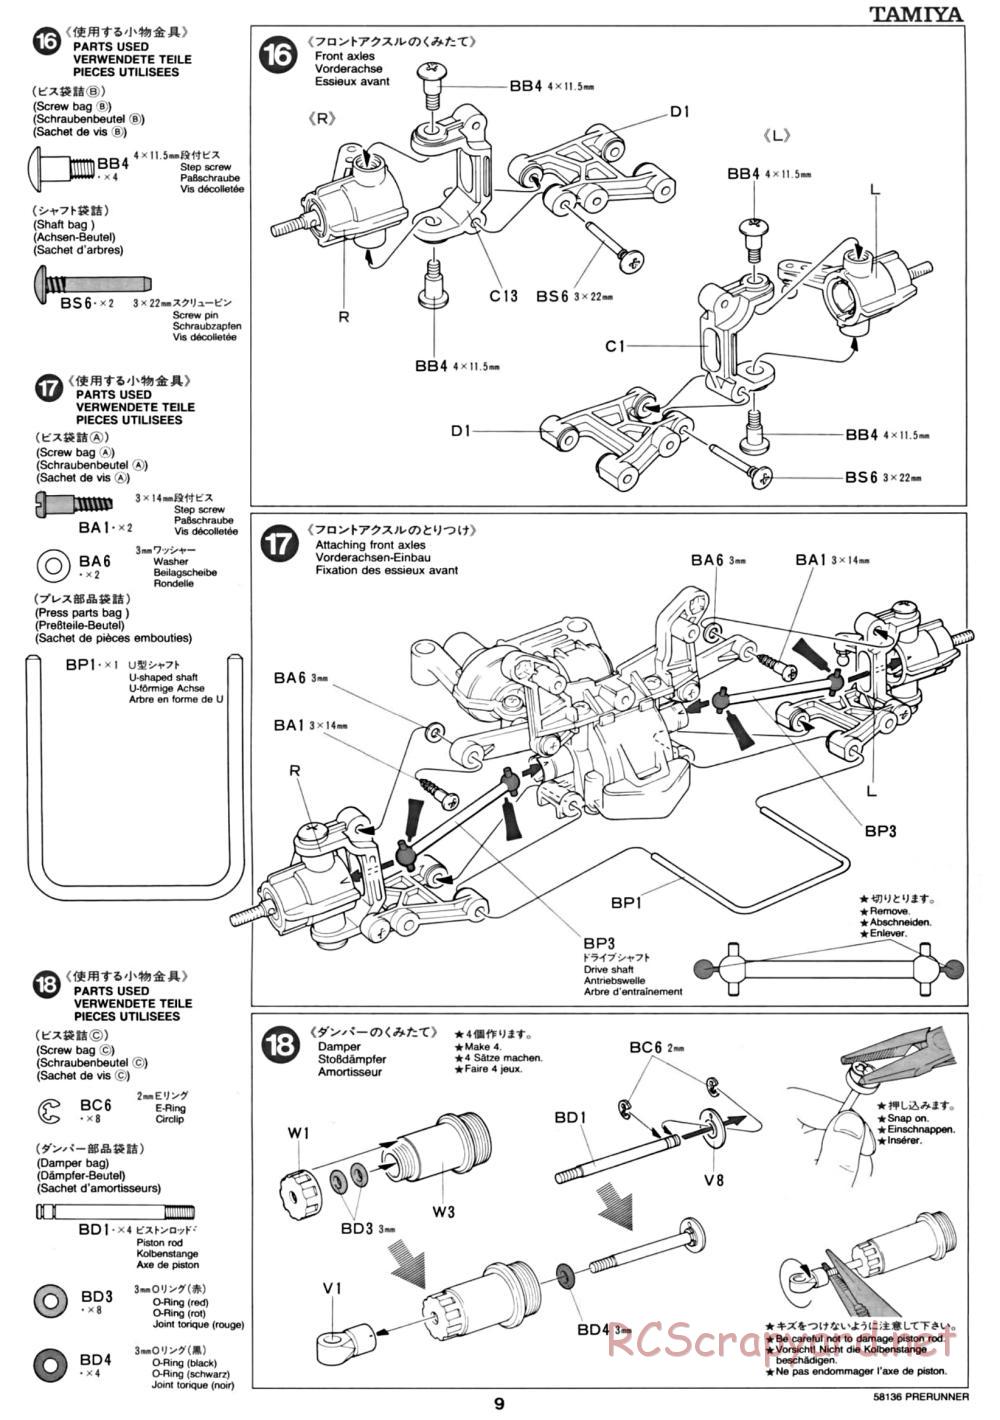 Tamiya - Toyota Prerunner Chassis - Manual - Page 9